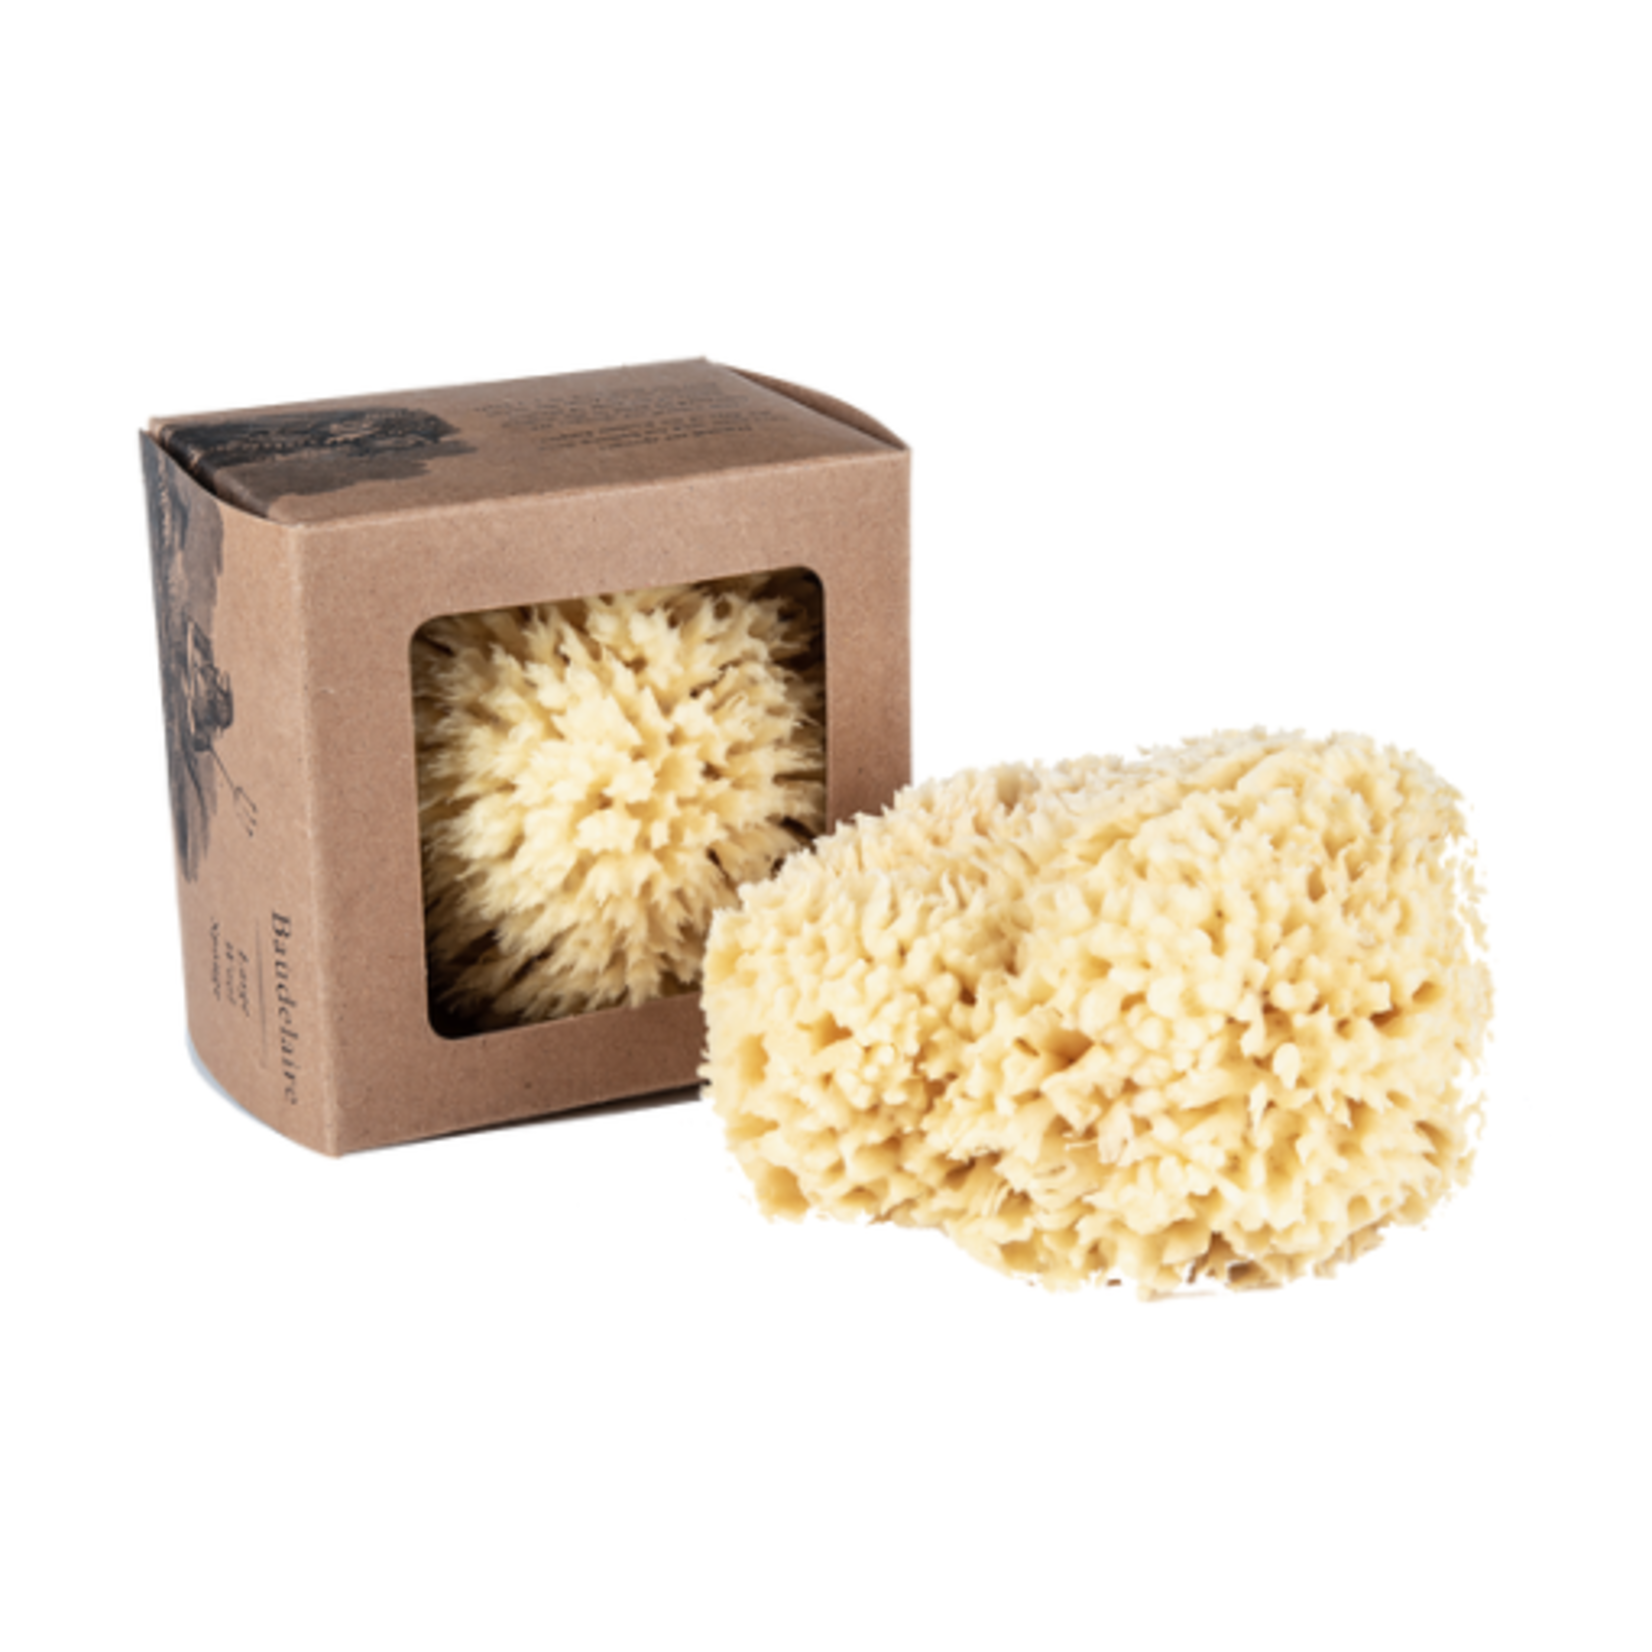 BAUDELAIRE Boxed Wool Sponge-Large